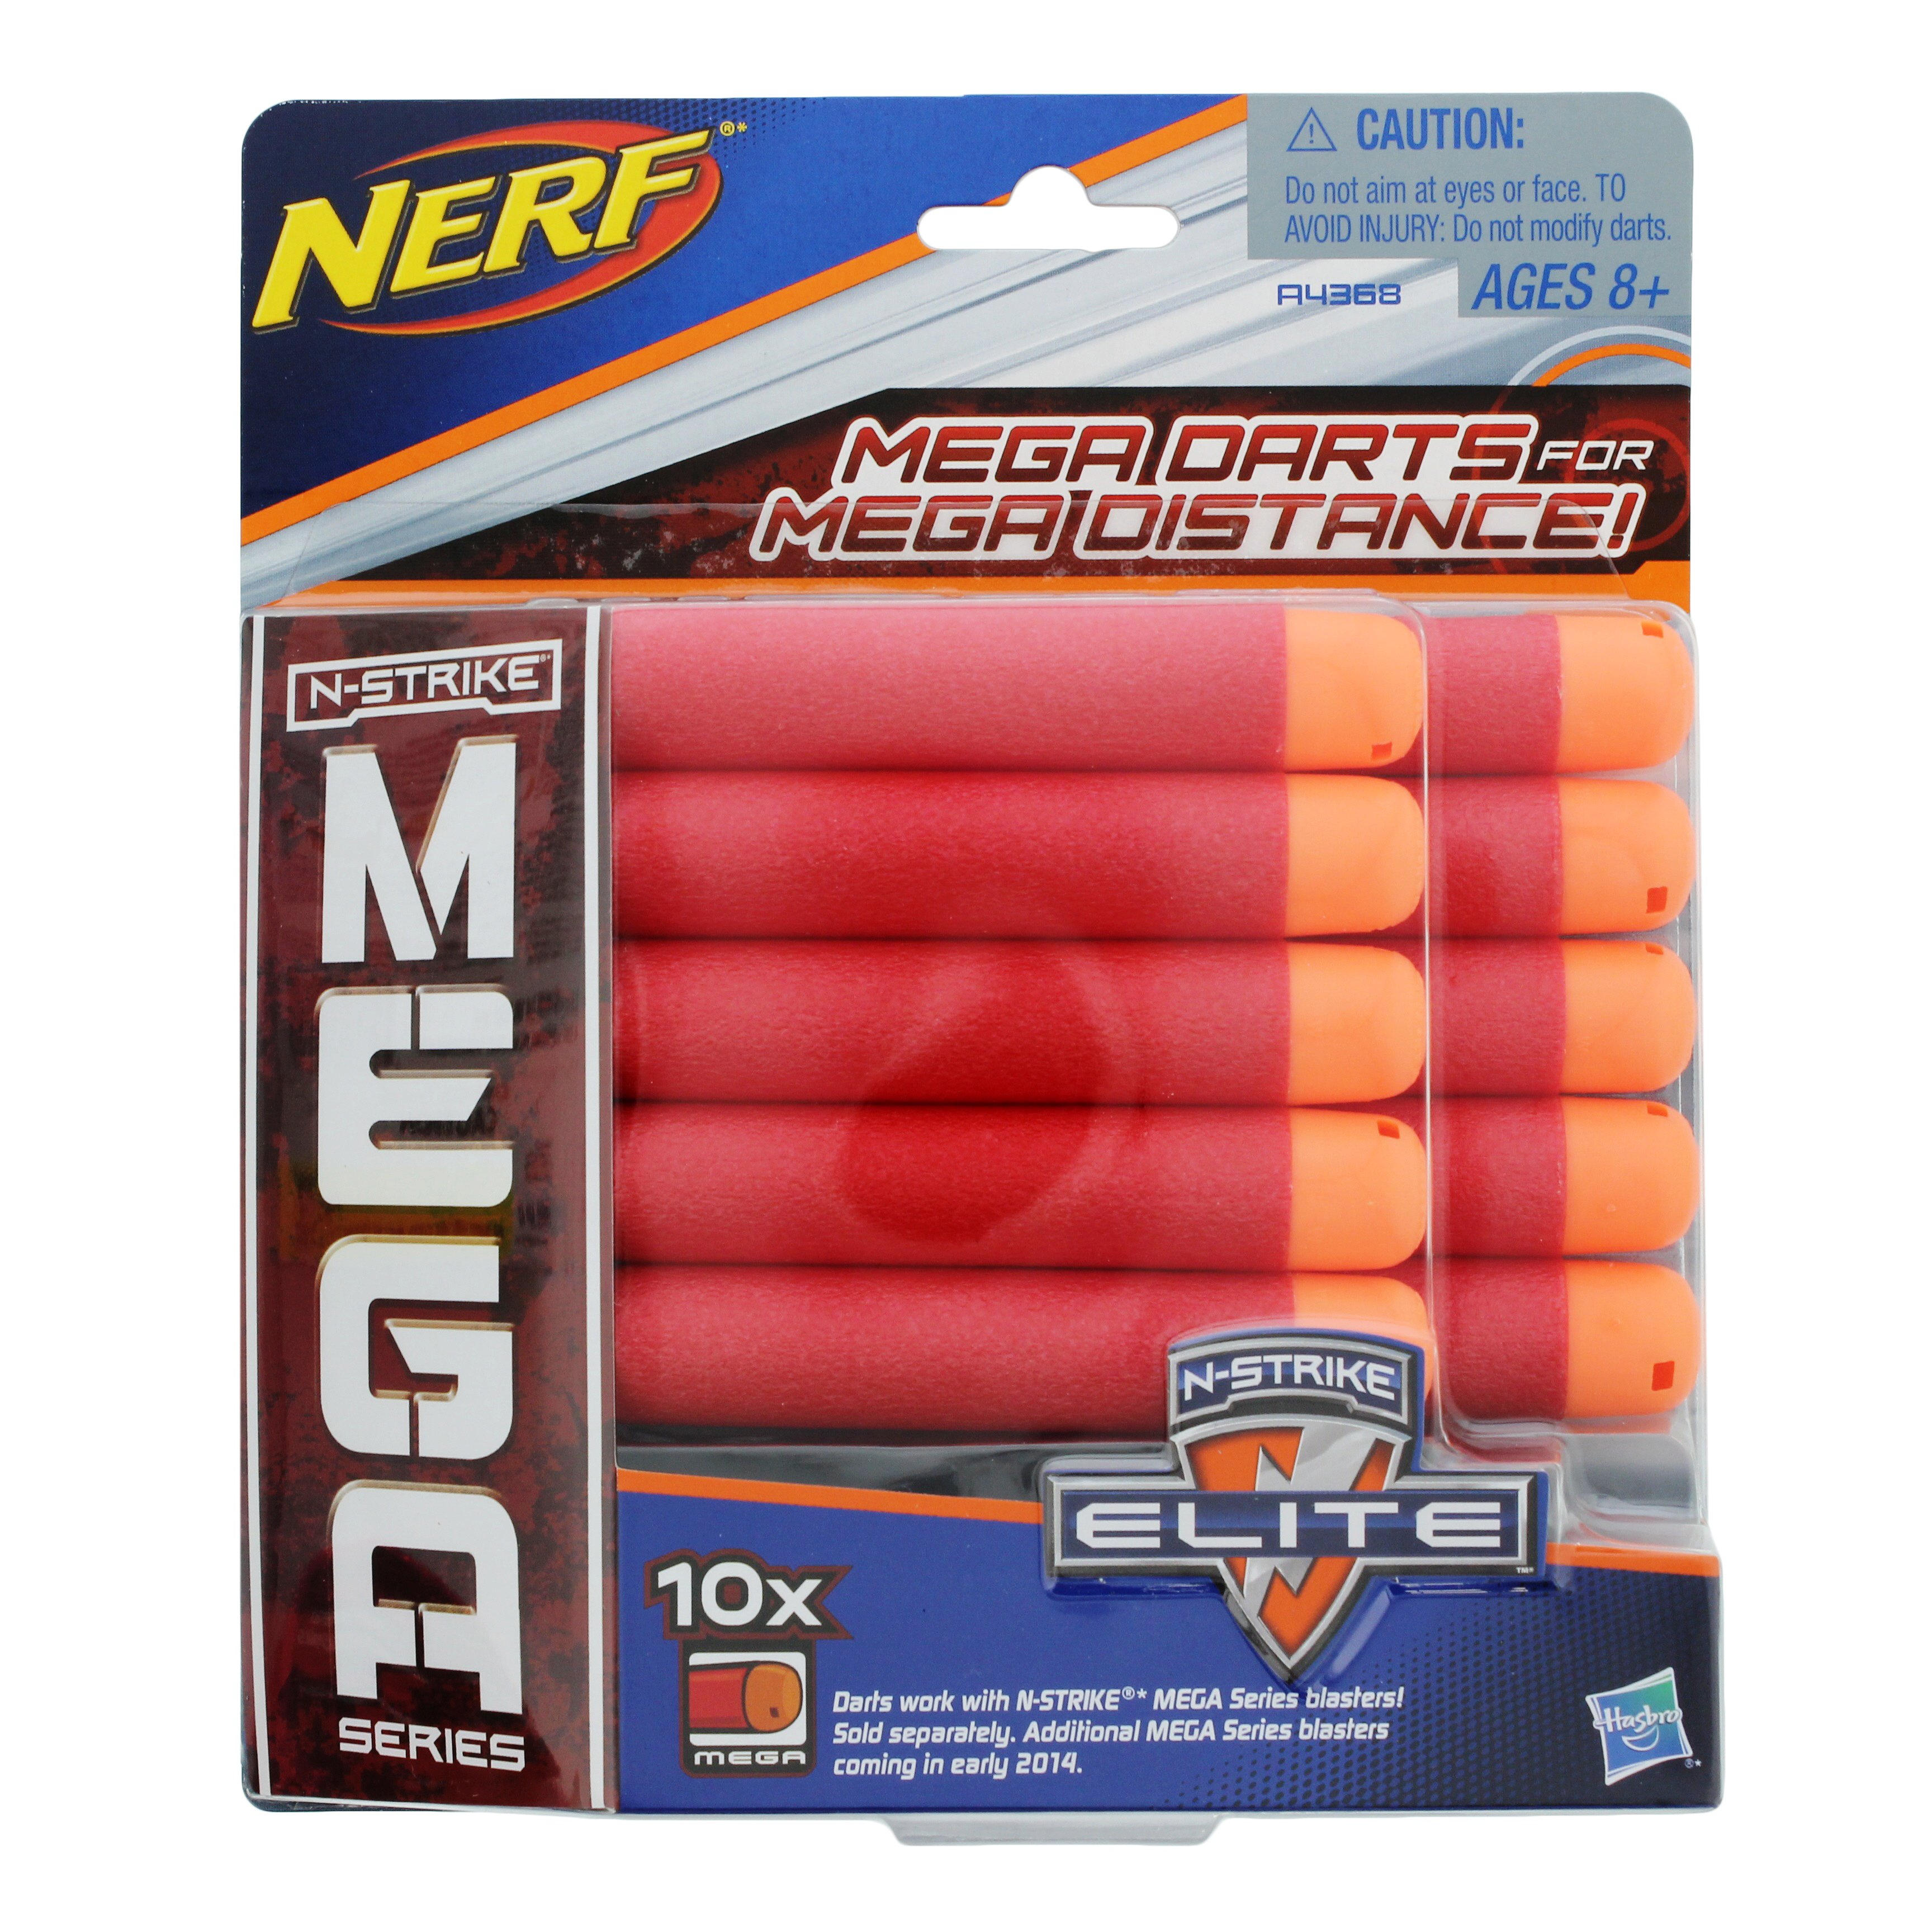 Nerf N-Strike Elite Dart Shop Blasters at H-E-B